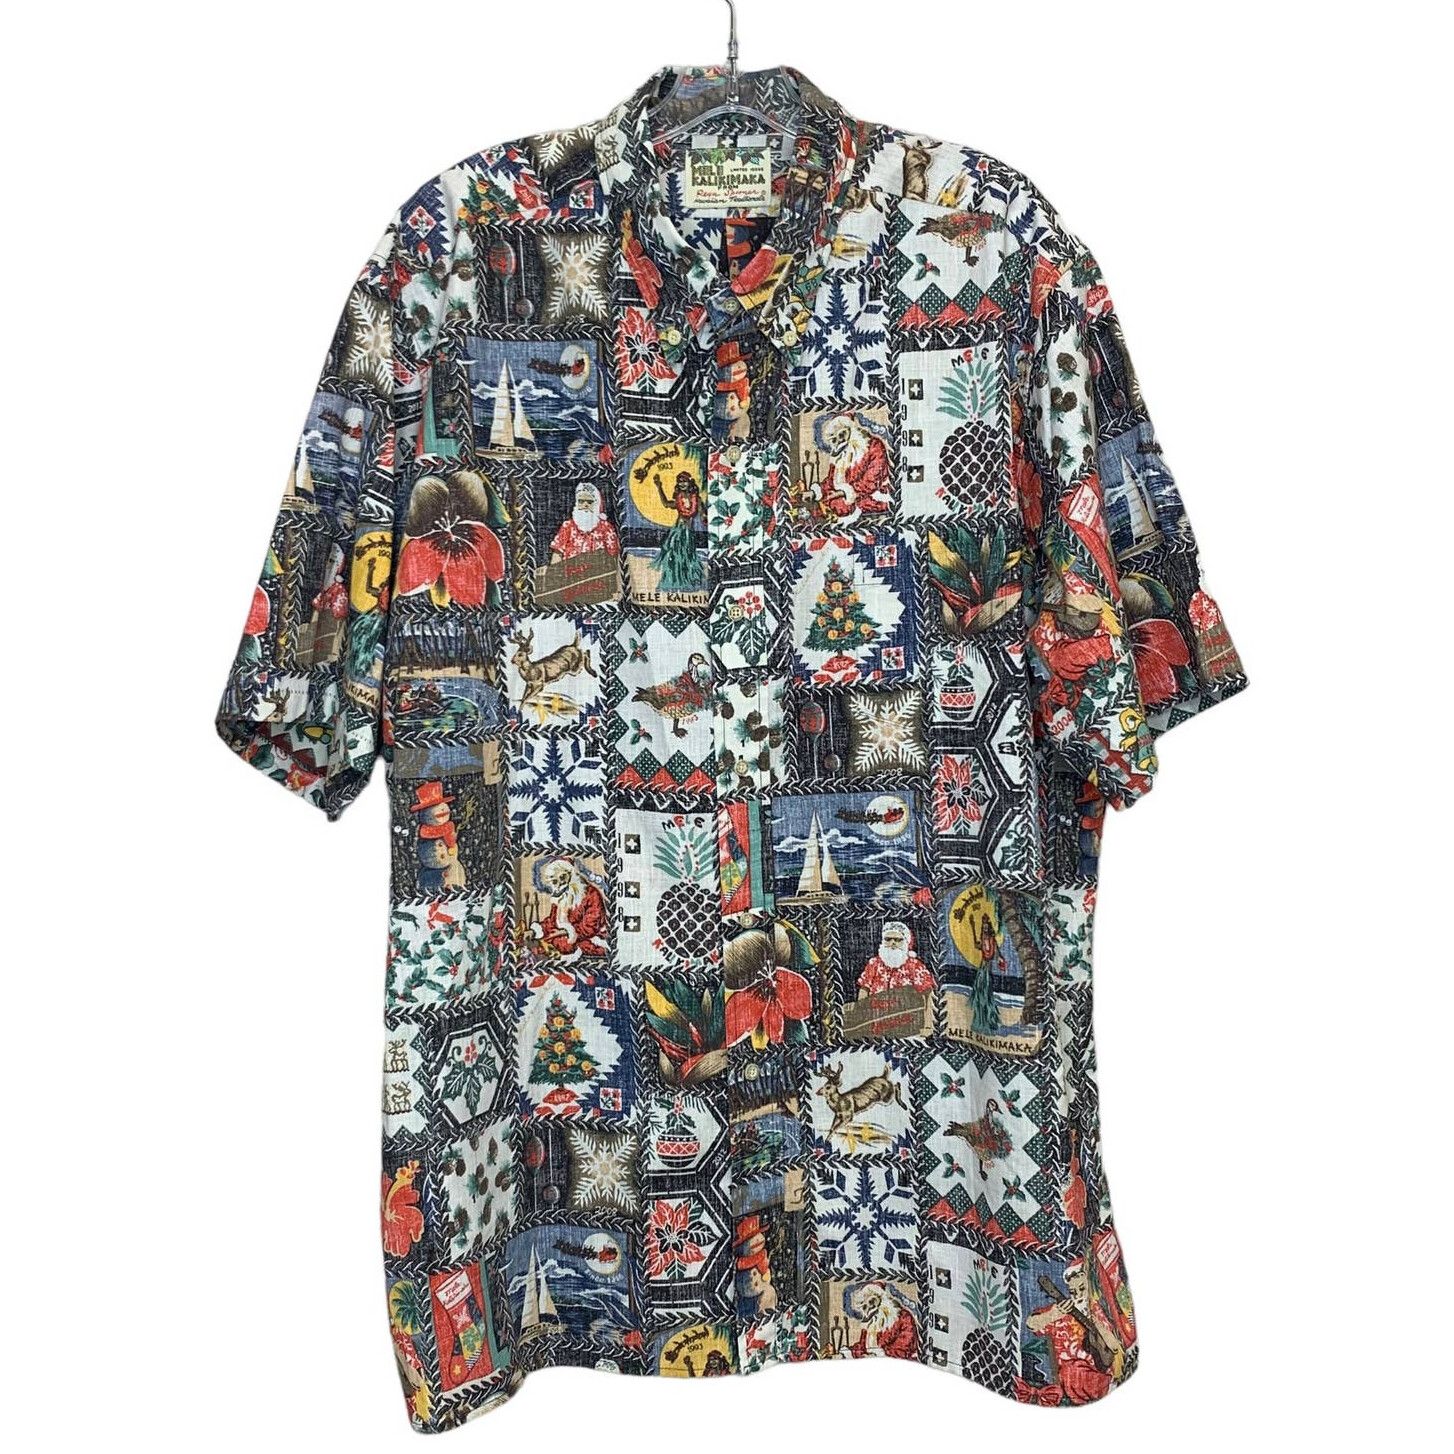 Reyn Spooner Reyn Spooner Mele Kalikimaka Hawaiian Shirt Christmas SZ XXL Size US XXL / EU 58 / 5 - 1 Preview